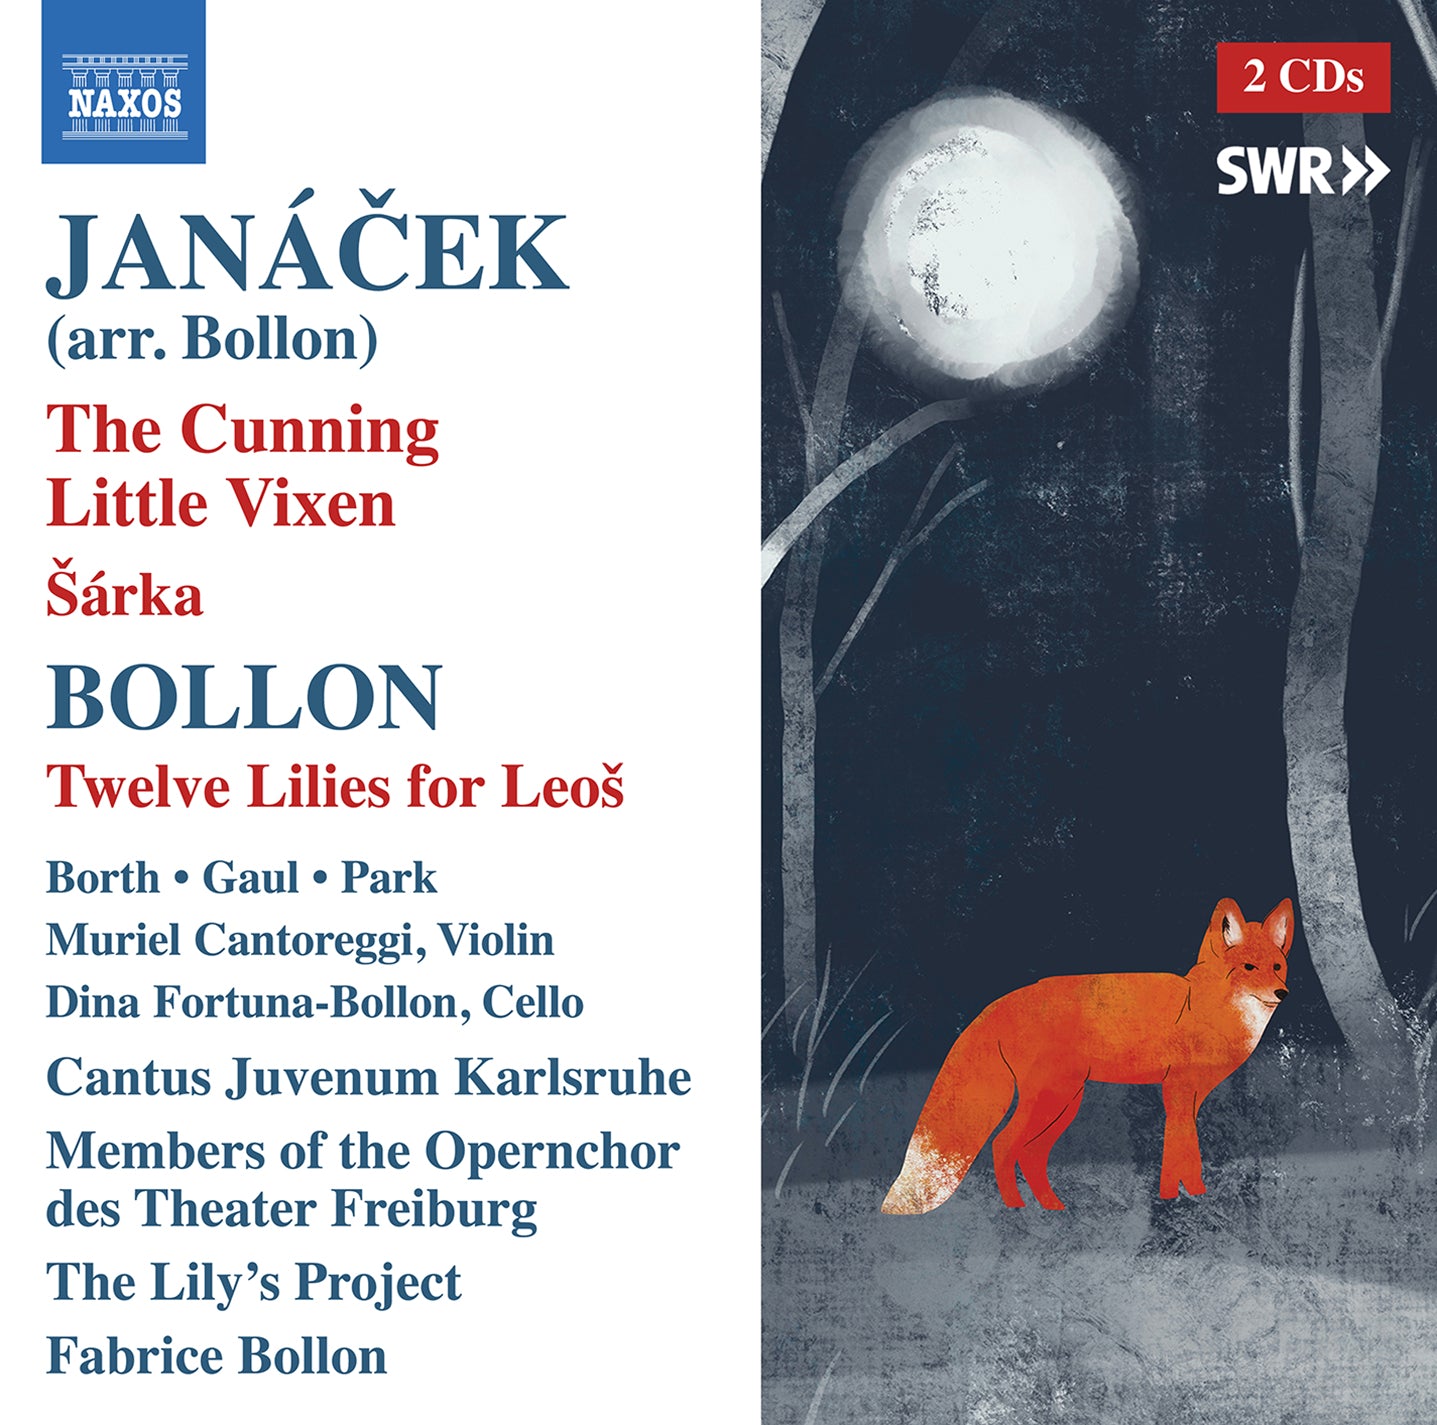 Janáček-Bollon: Cunning Little Vixen, Šarka - Bollon: Twelve Lillies for Leoš